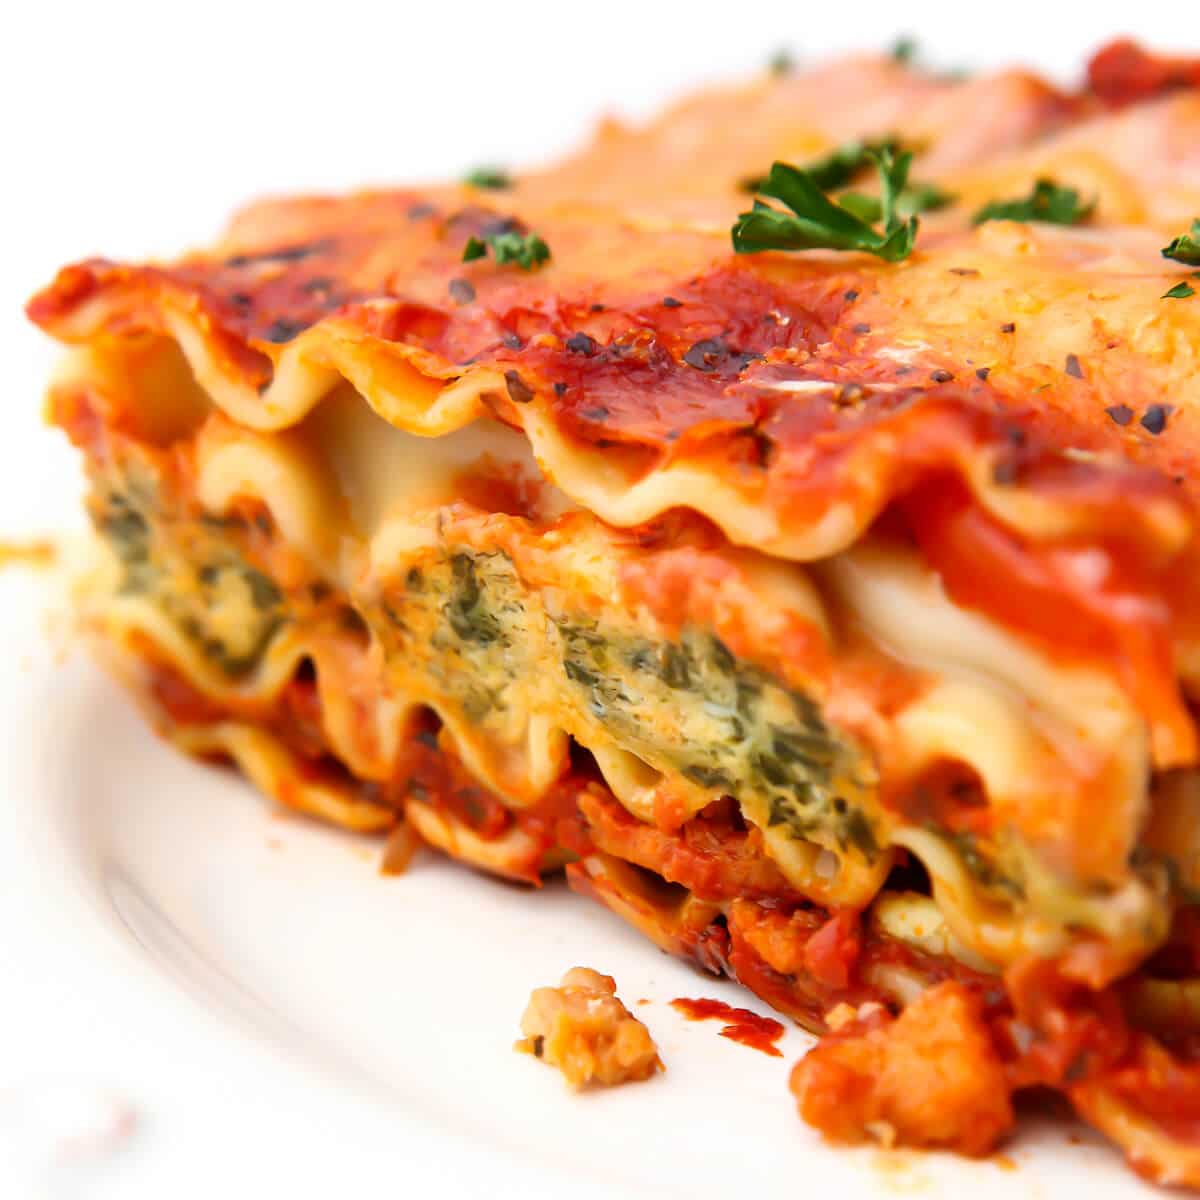 The Vegan lasagna recipe you’ll Love!